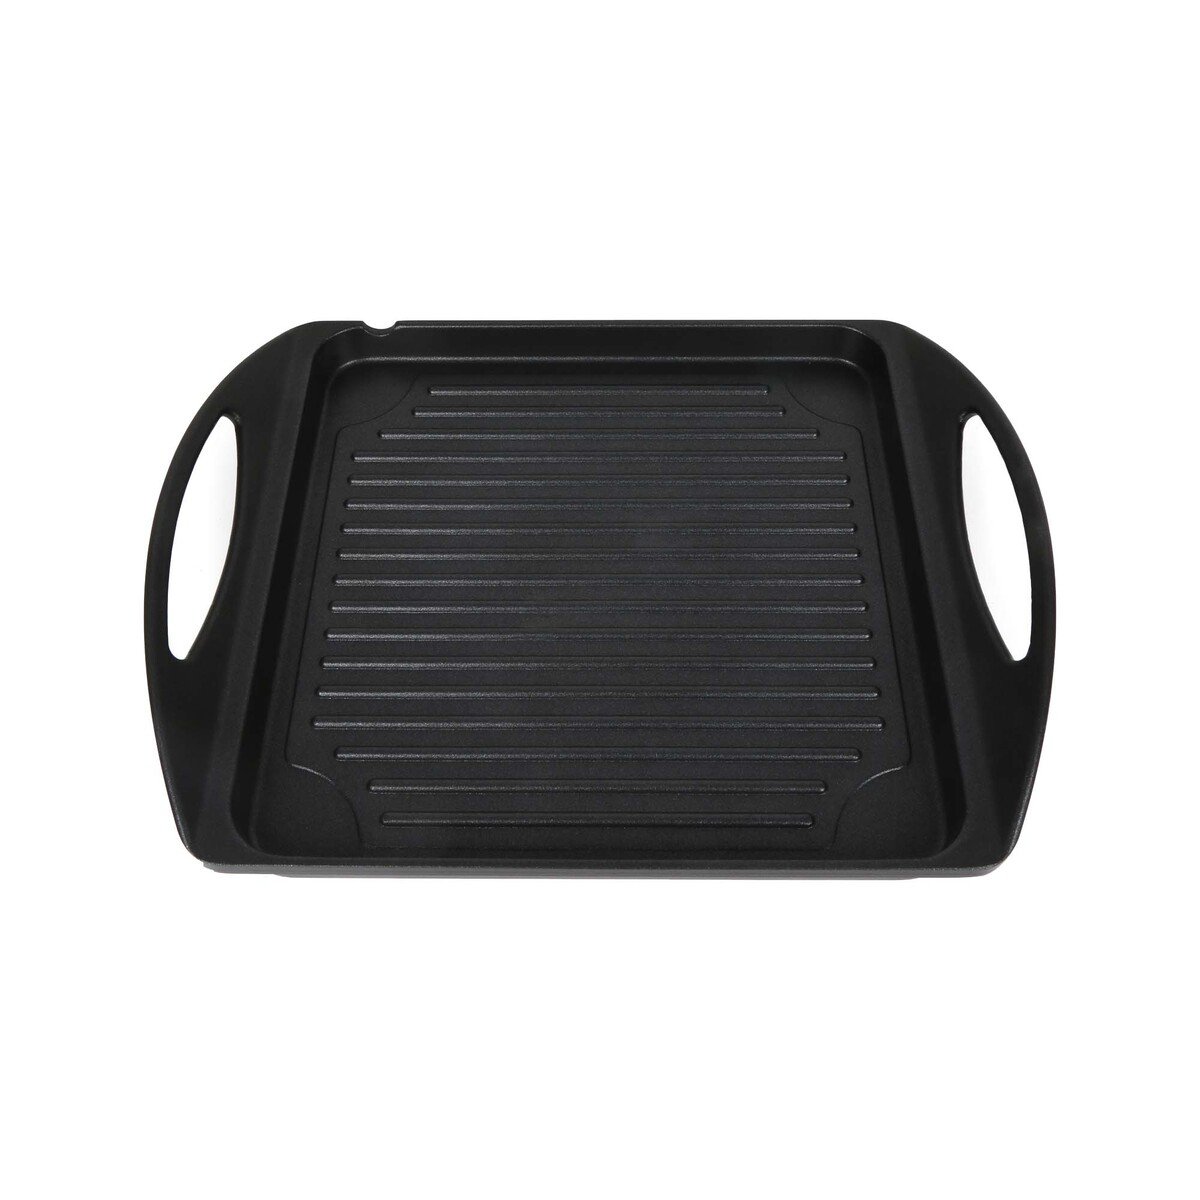 Chefline Induction Bottom Die Cast Aluminum Grill Pan, Square, 34 x 26.5 cm, Black, XGP-03B